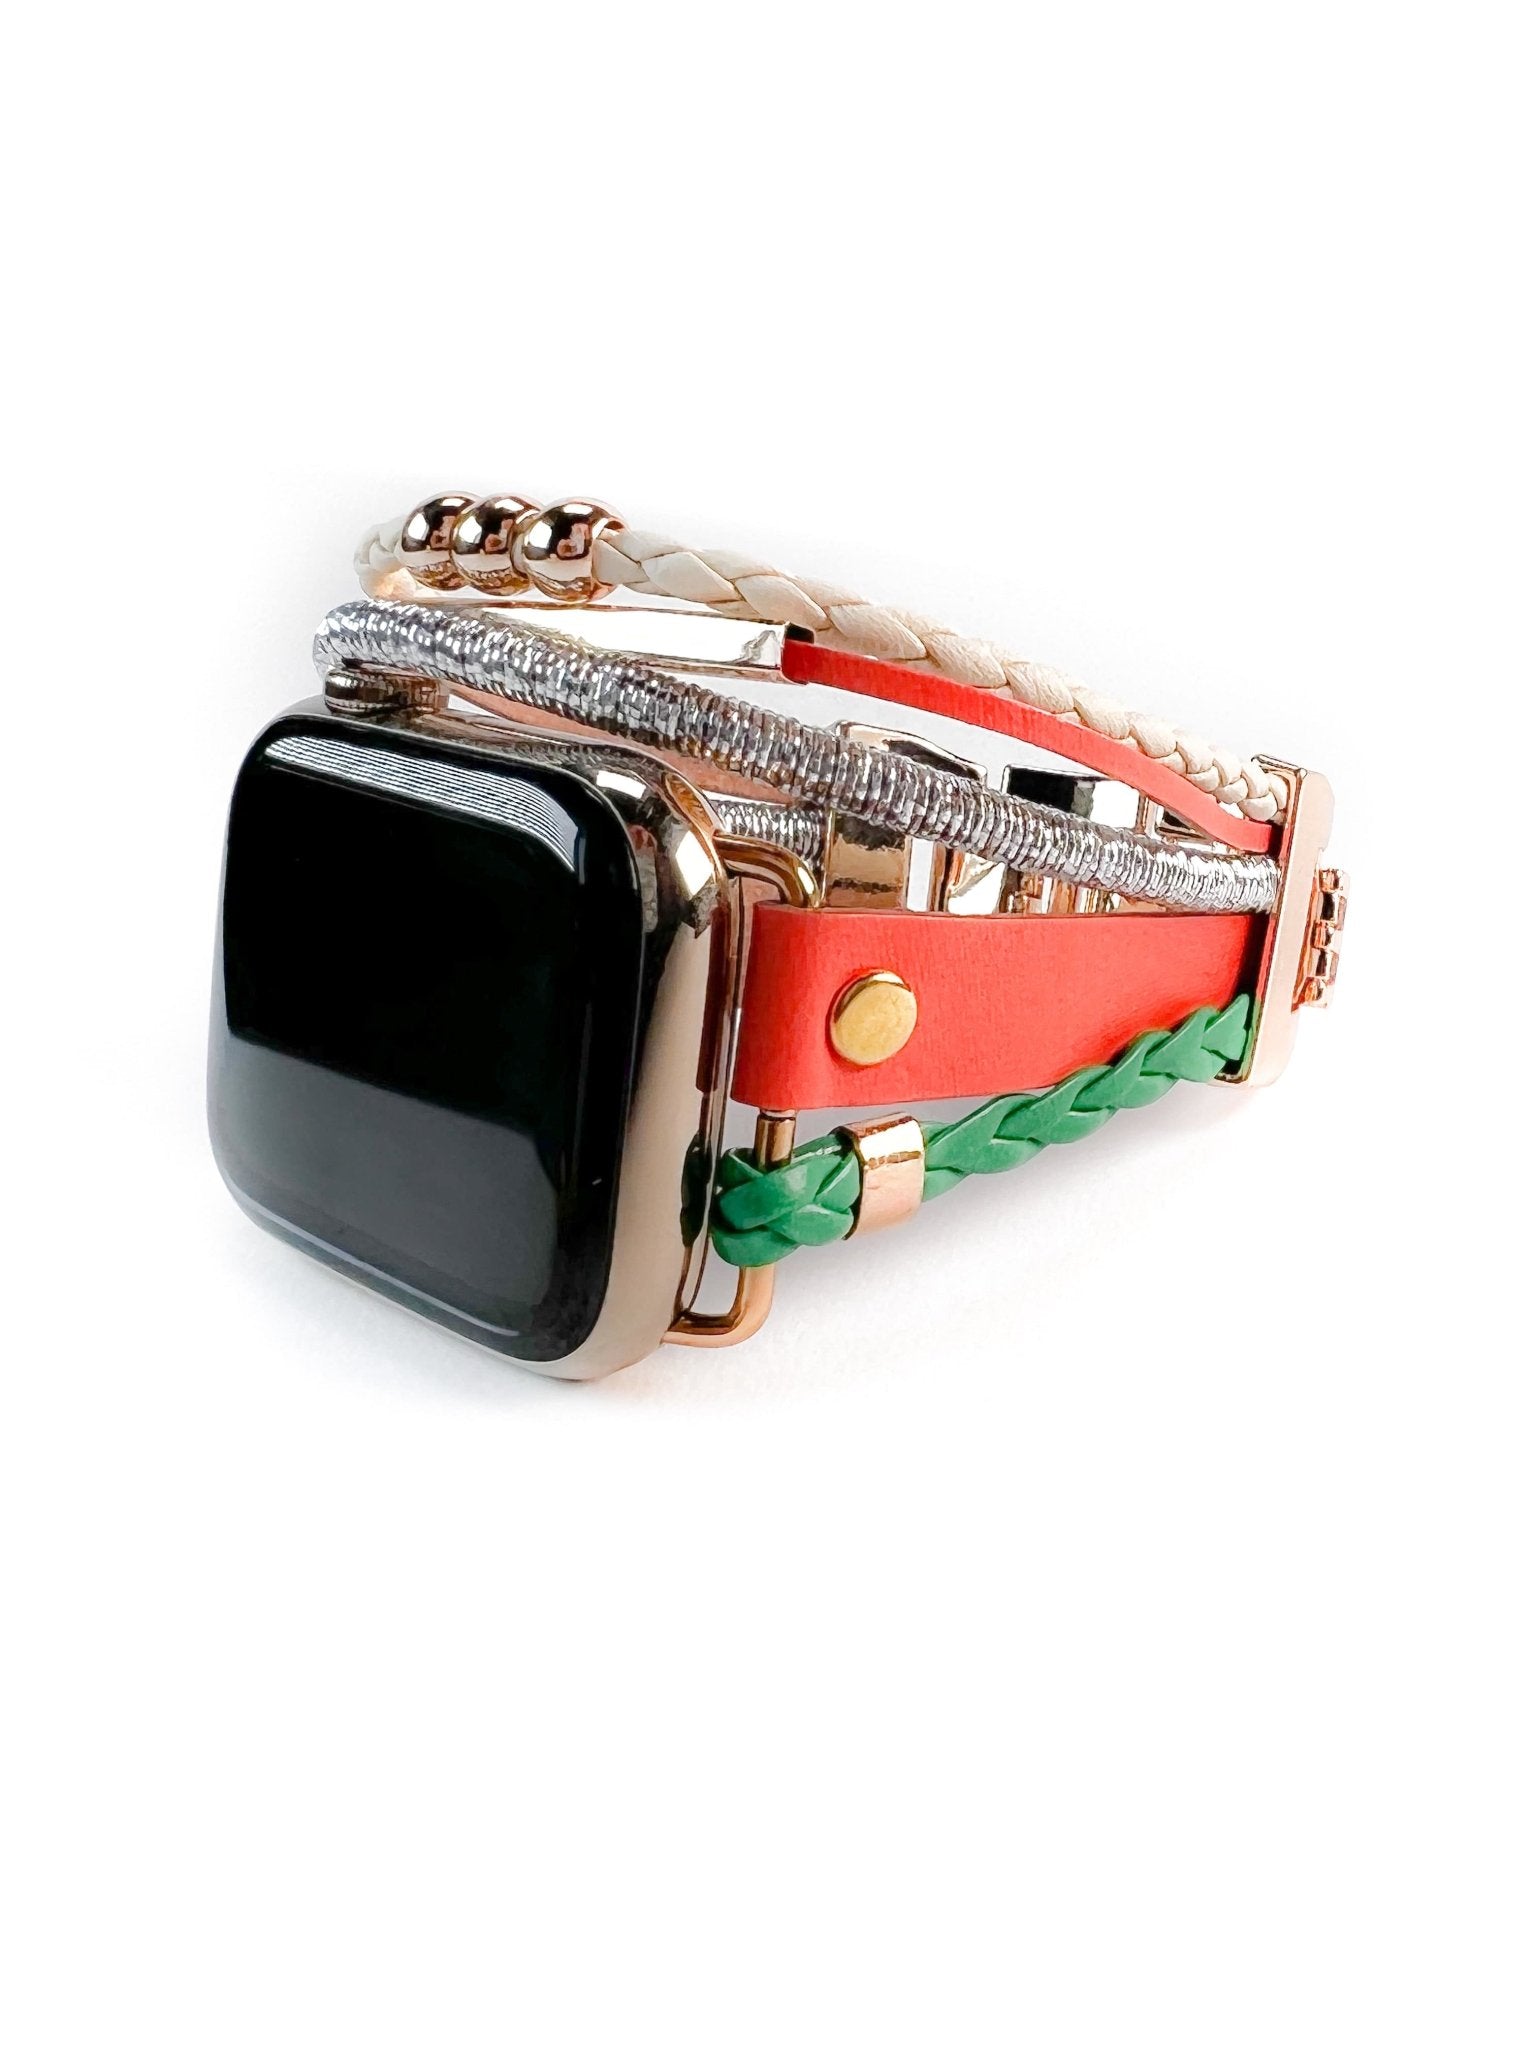 Bichrome Leather Layered Watch Band - Mareevo